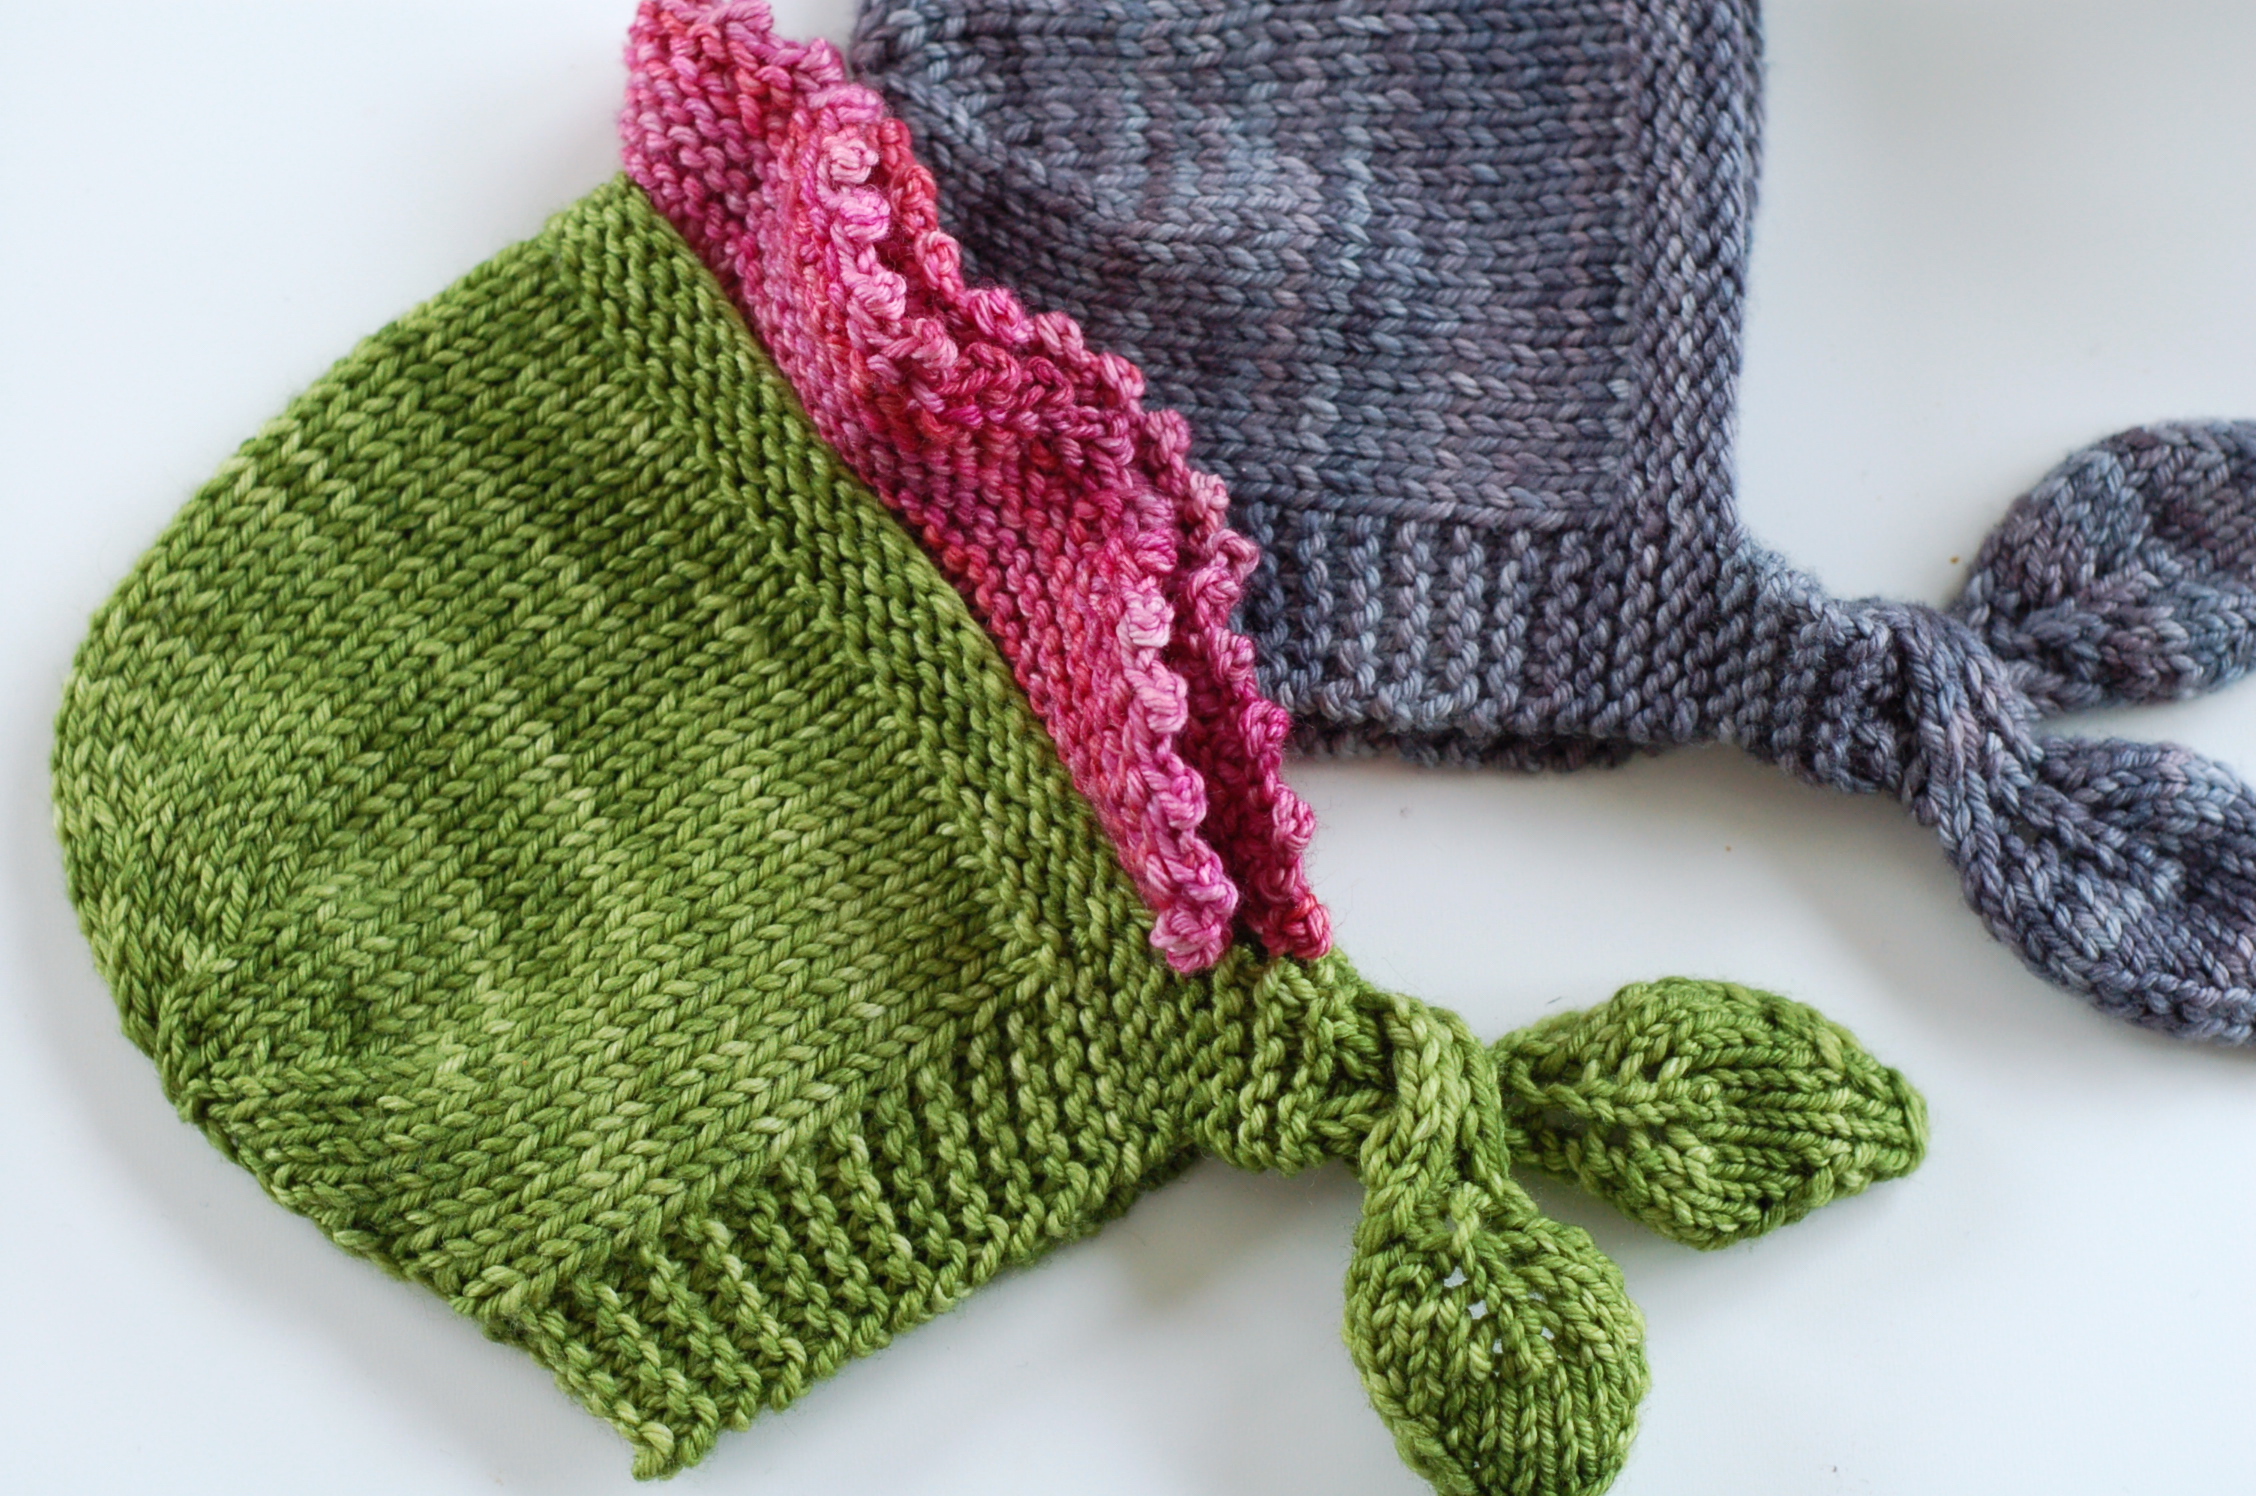 Buds and Blossoms Bonnet knitting pattern by Lisa Chemery - Frogginette Knitting Patterns